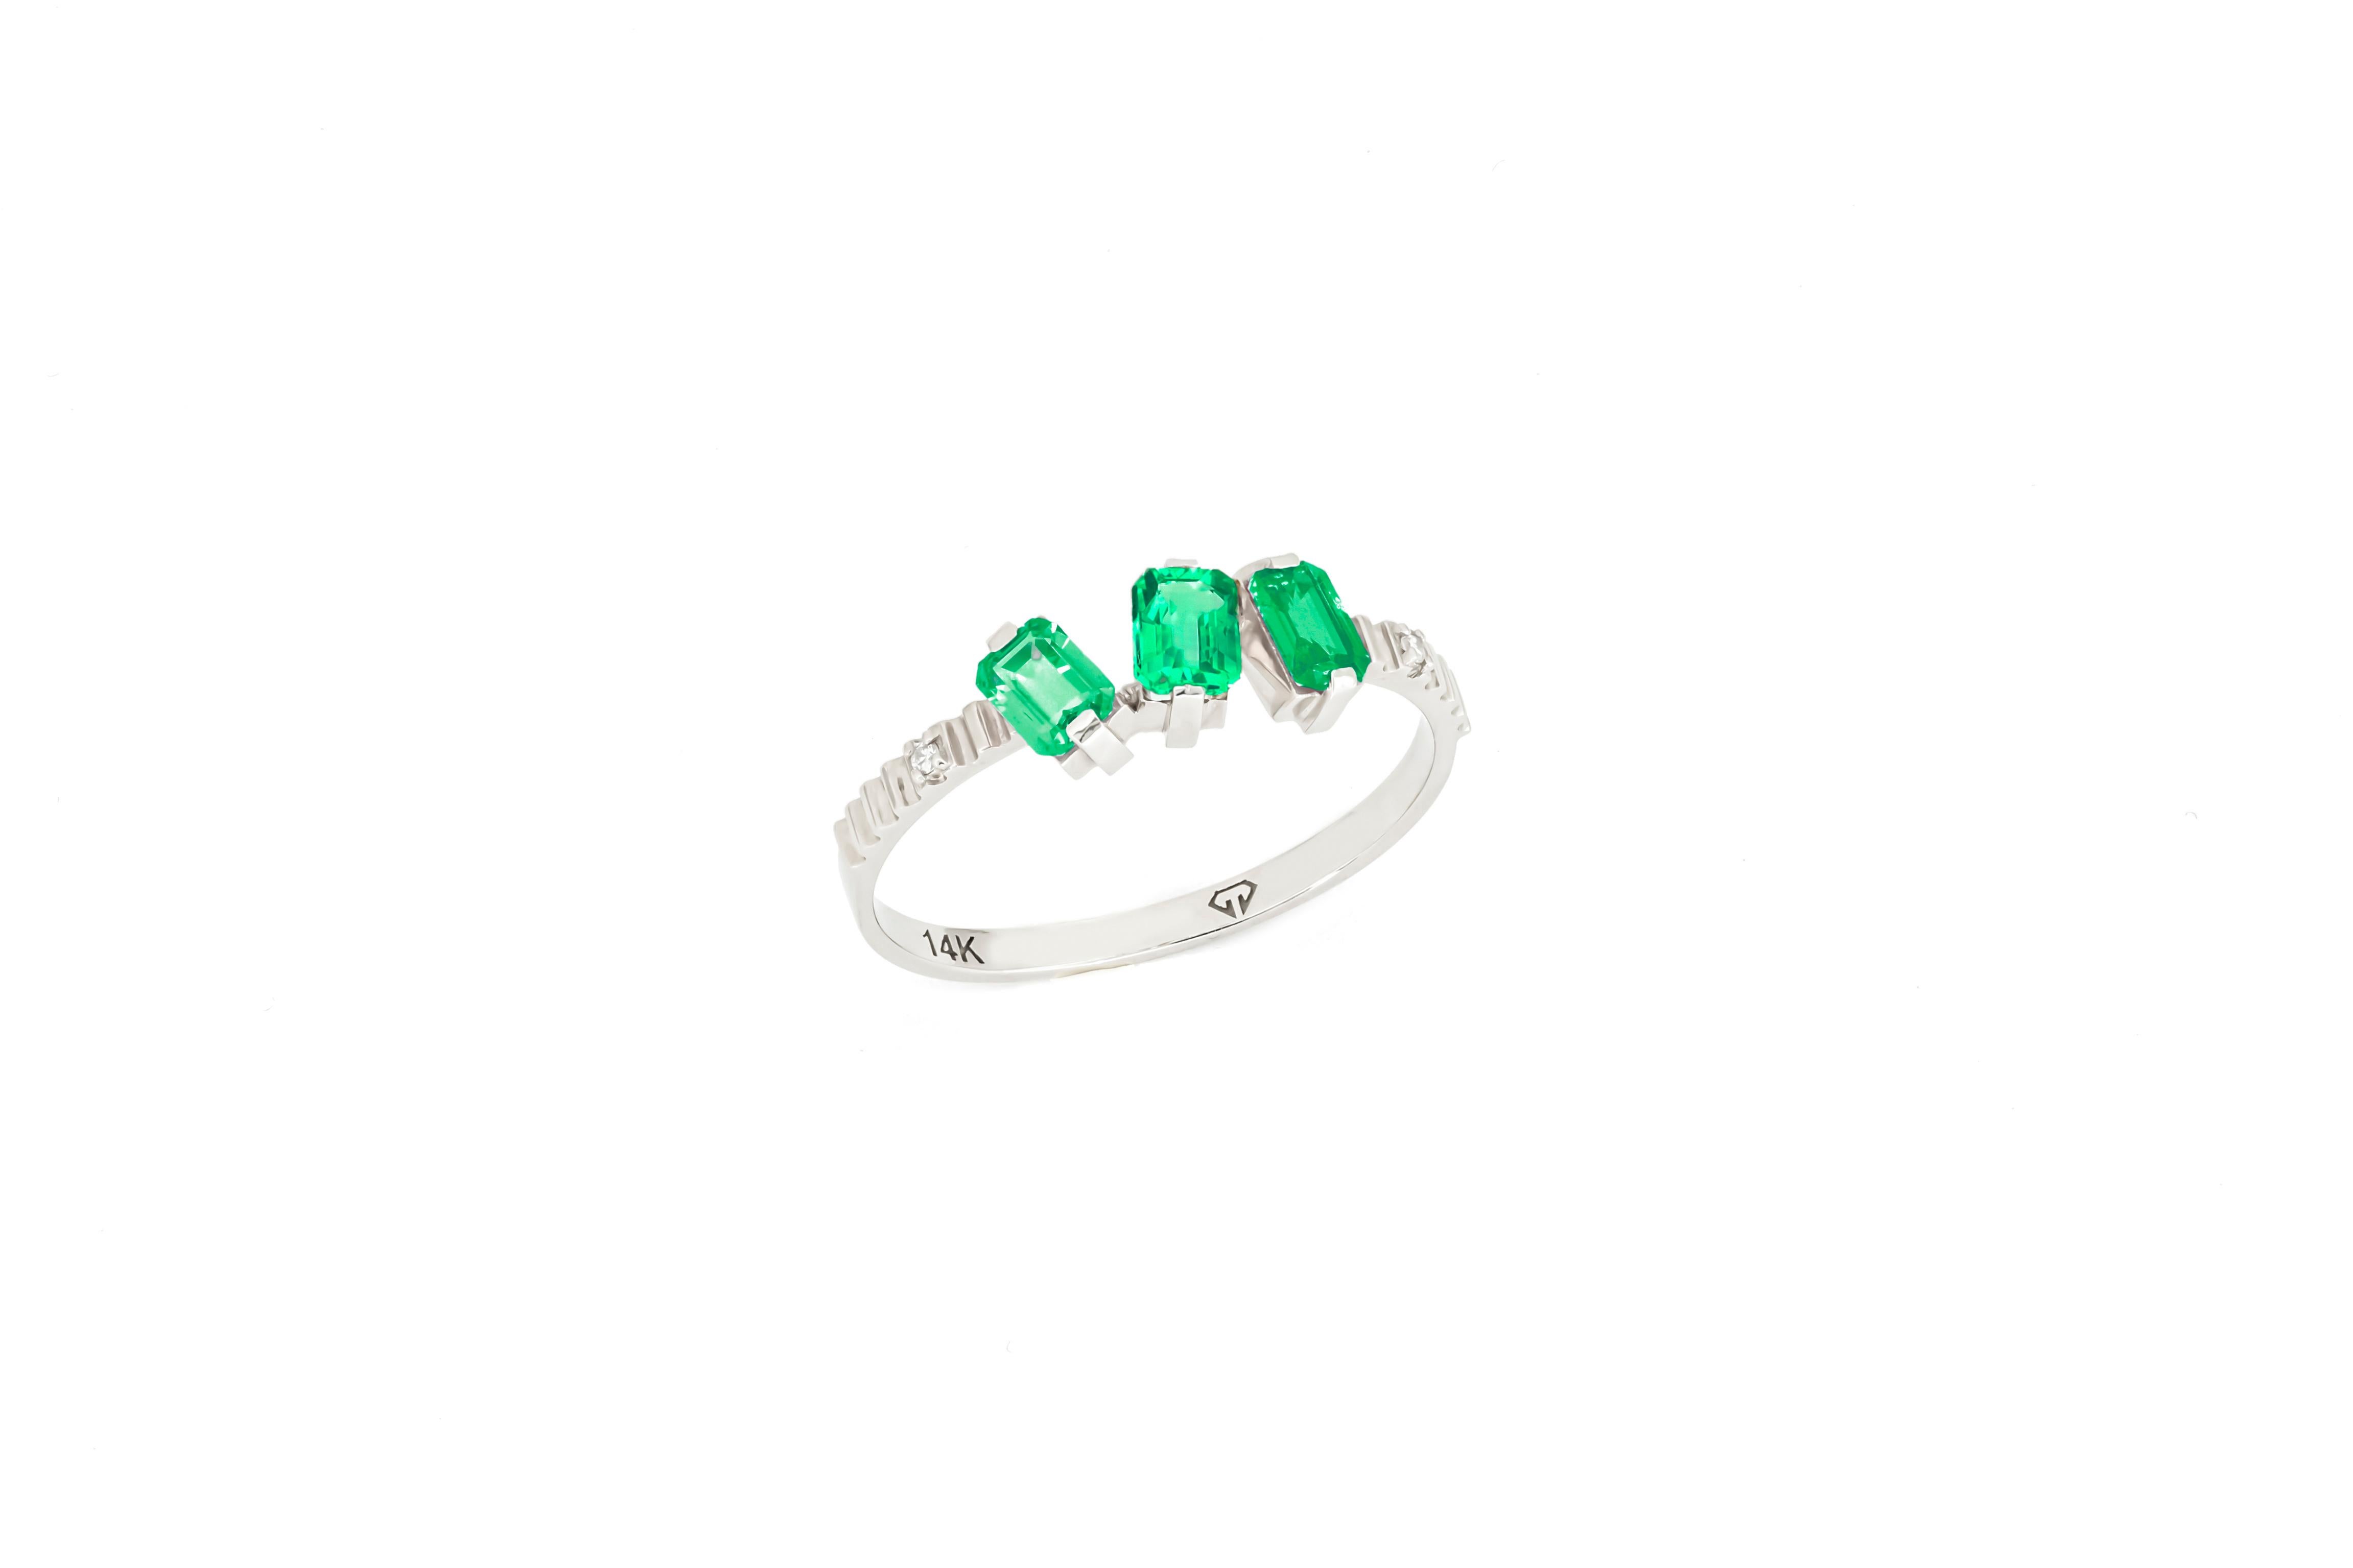 For Sale:  Monochrome green gemstone 14k ring.  6